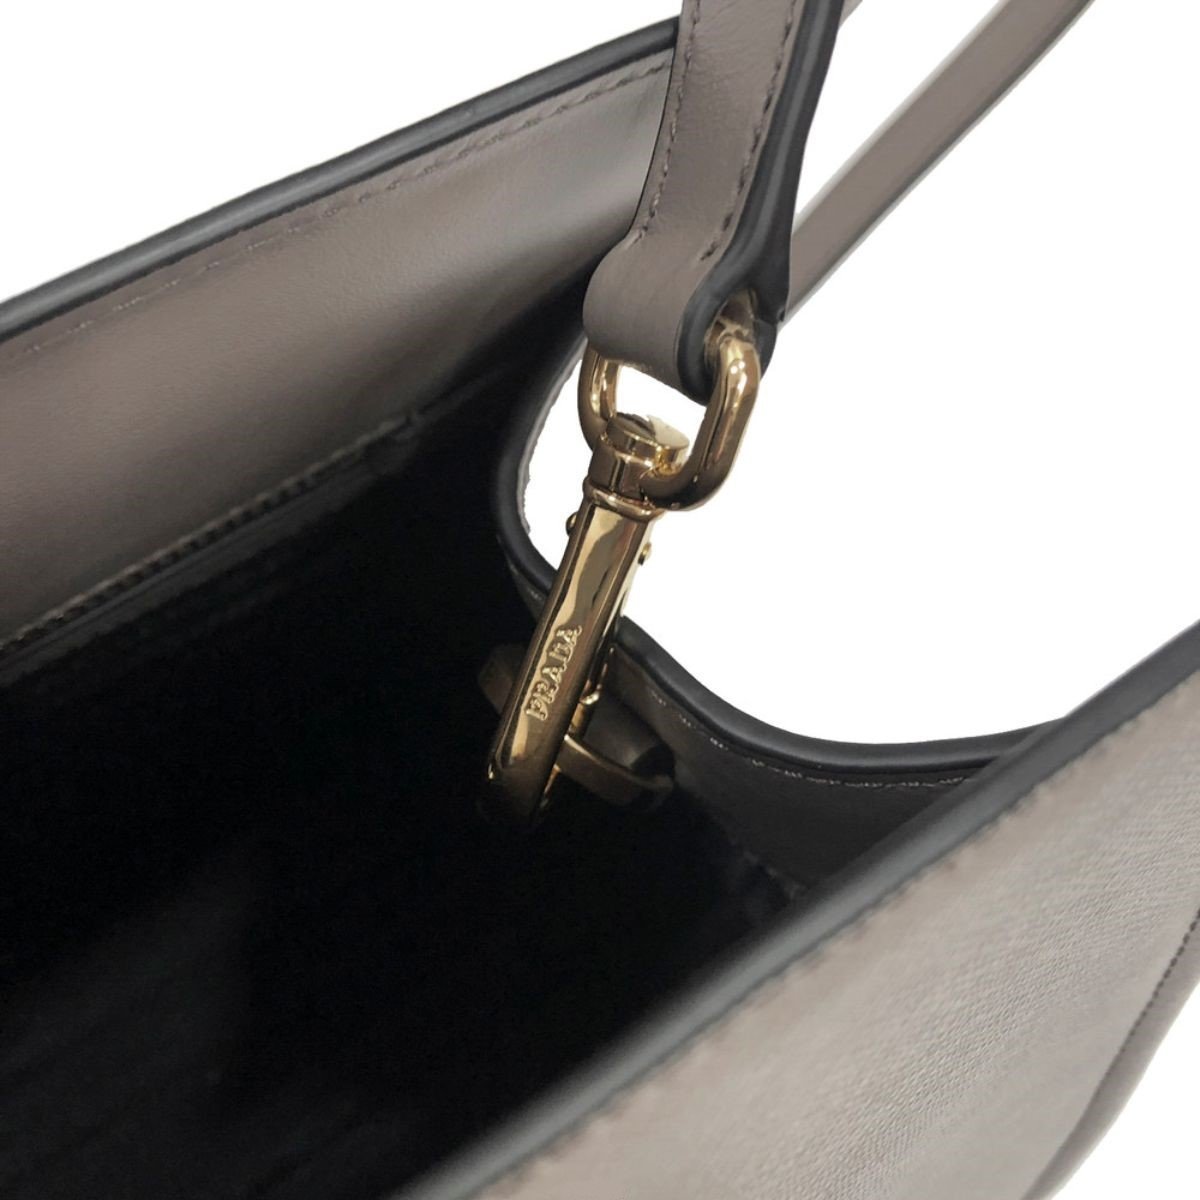 Prada Argilla Gray Saffiano Lux Leather Large Satchel Handbag - LUXURYMRKT